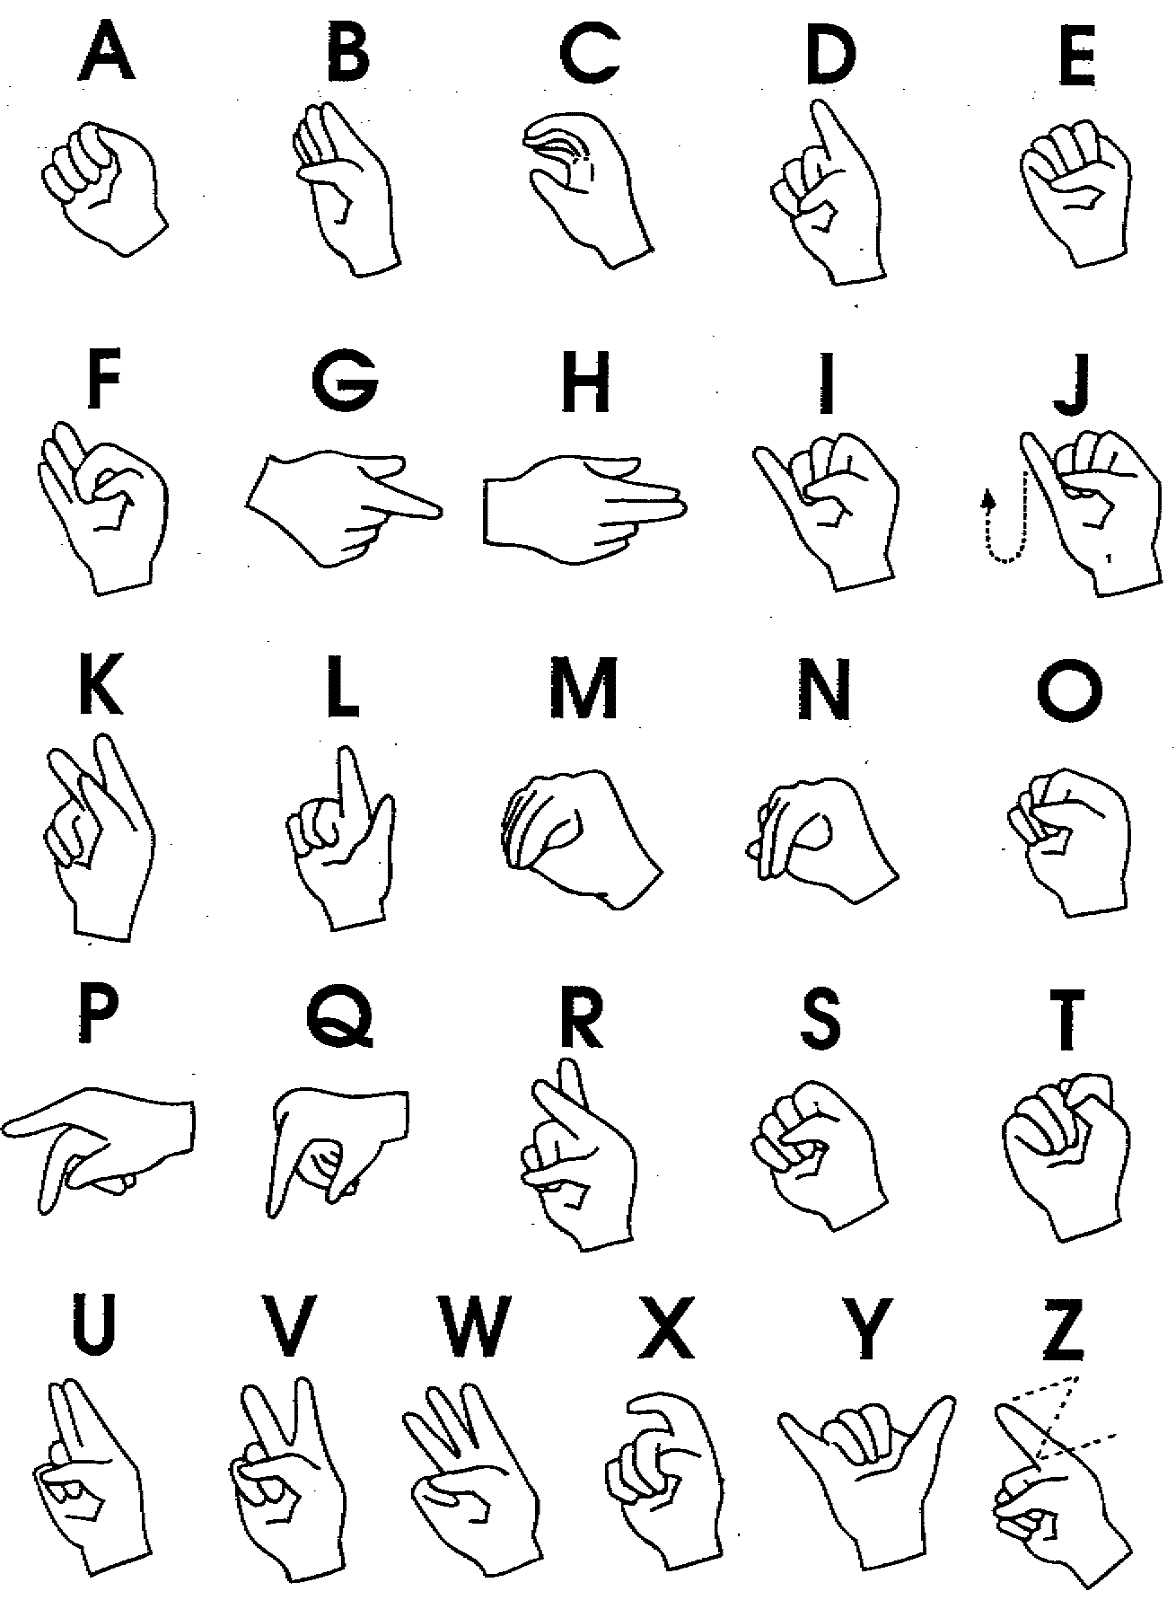 sign Language images 1